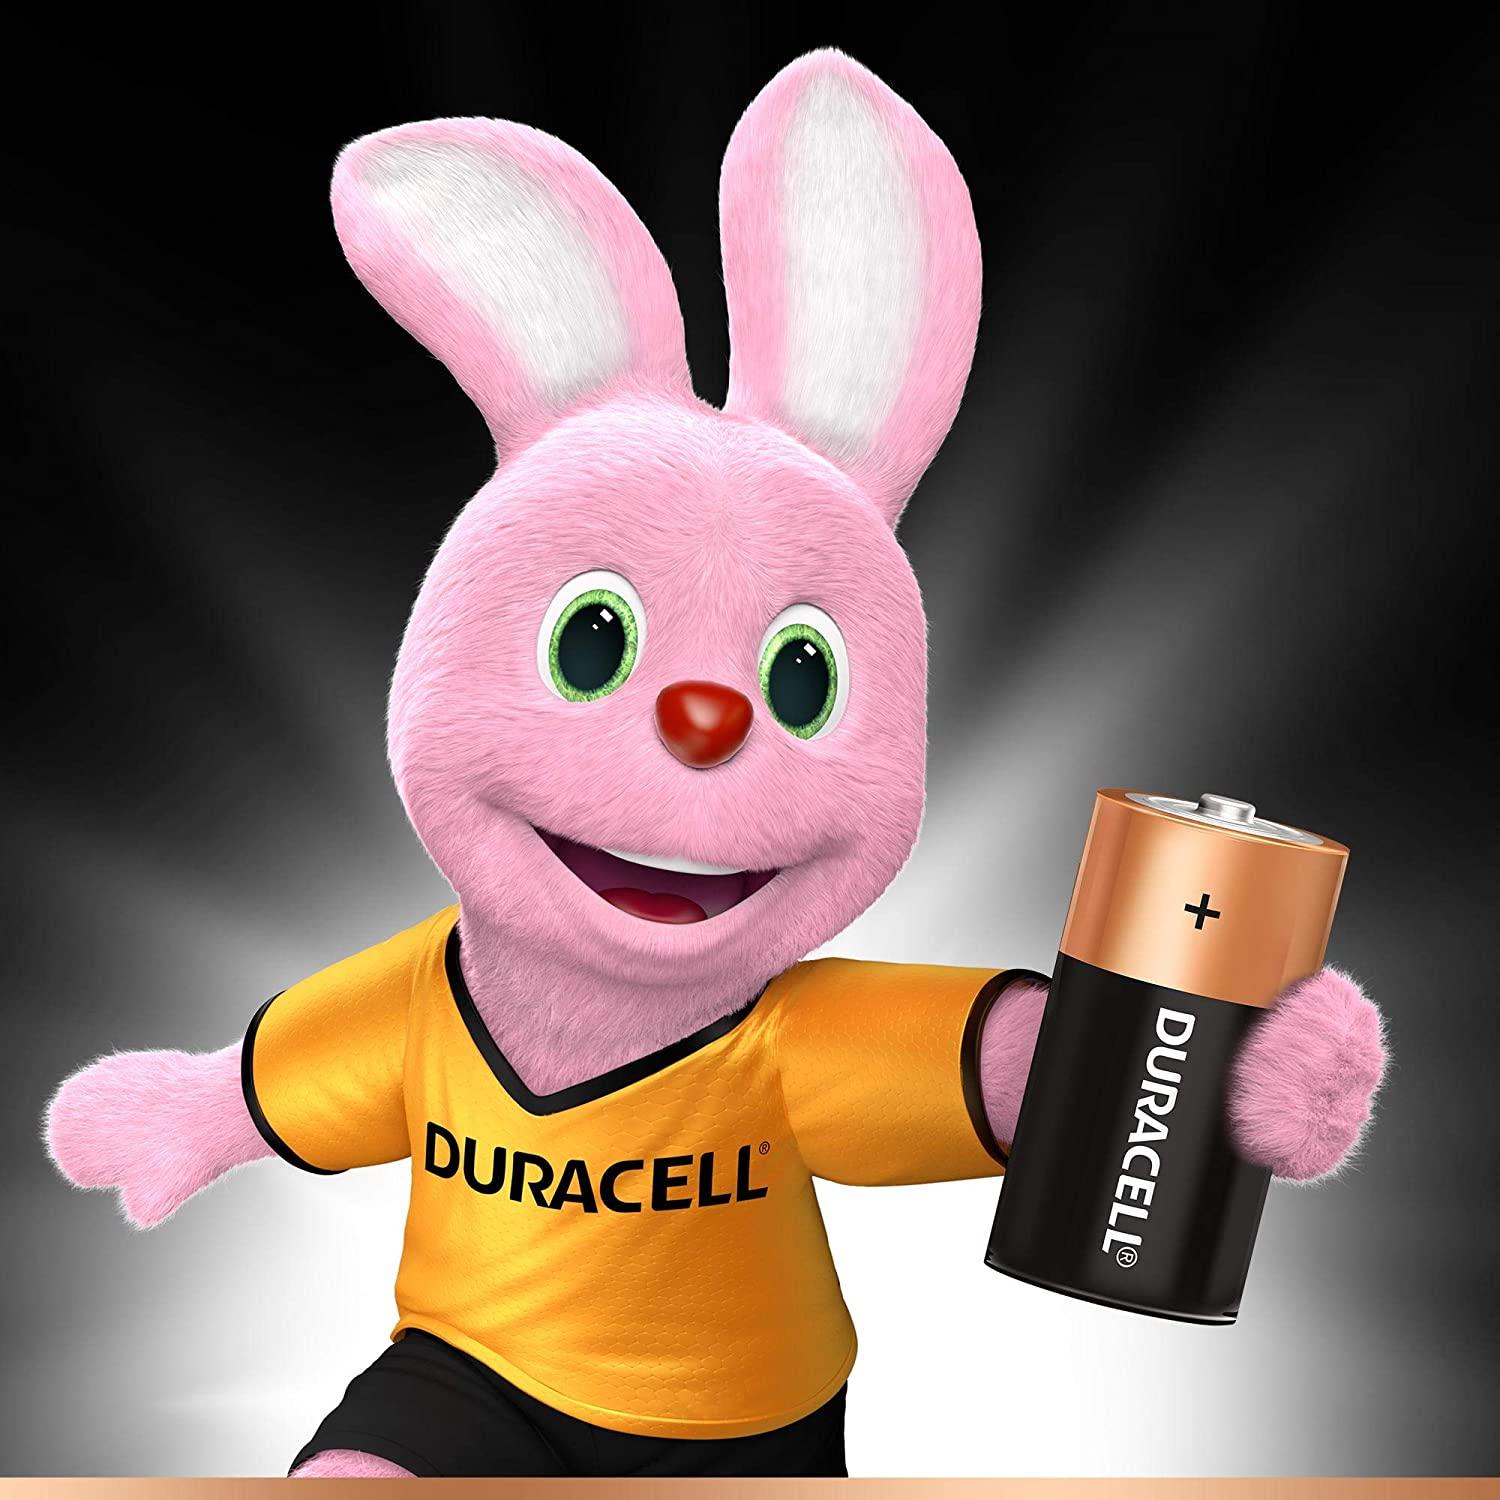 Duracell Ultra Alkaline C2 Battery-Battery-dealsplant